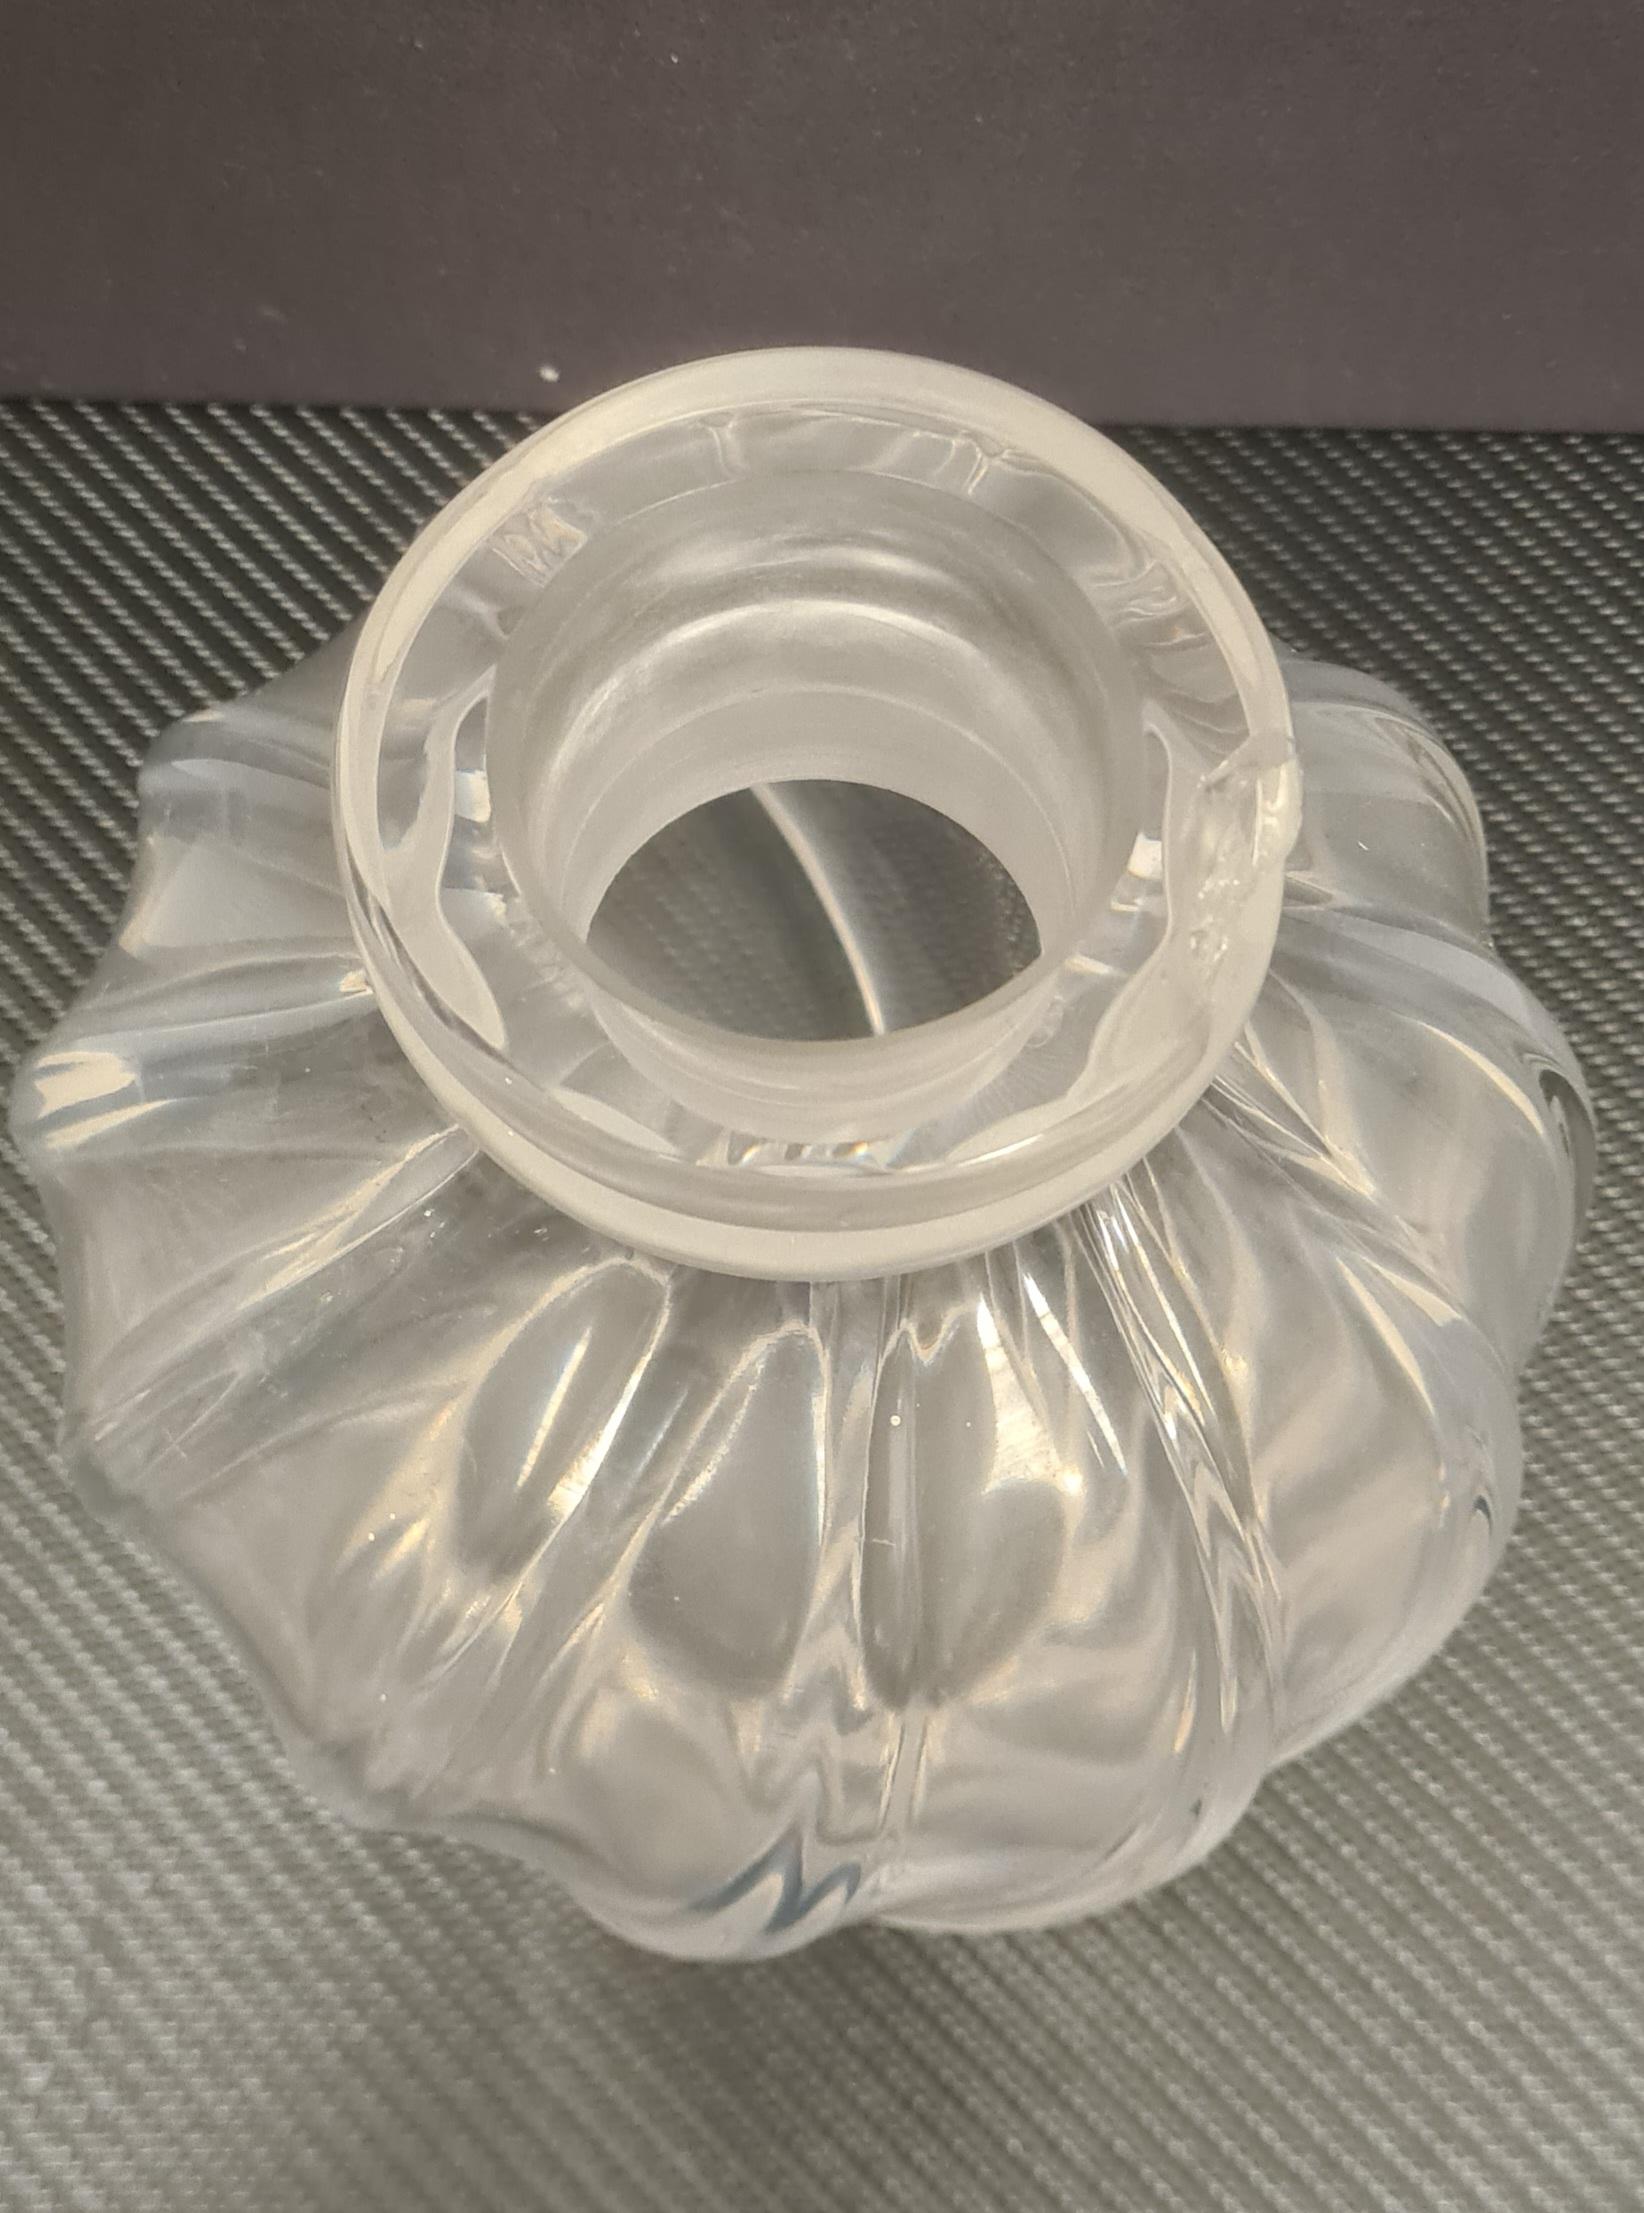 Large collectible Lalique glass bottle of the perfume L'air du temps For Sale 2